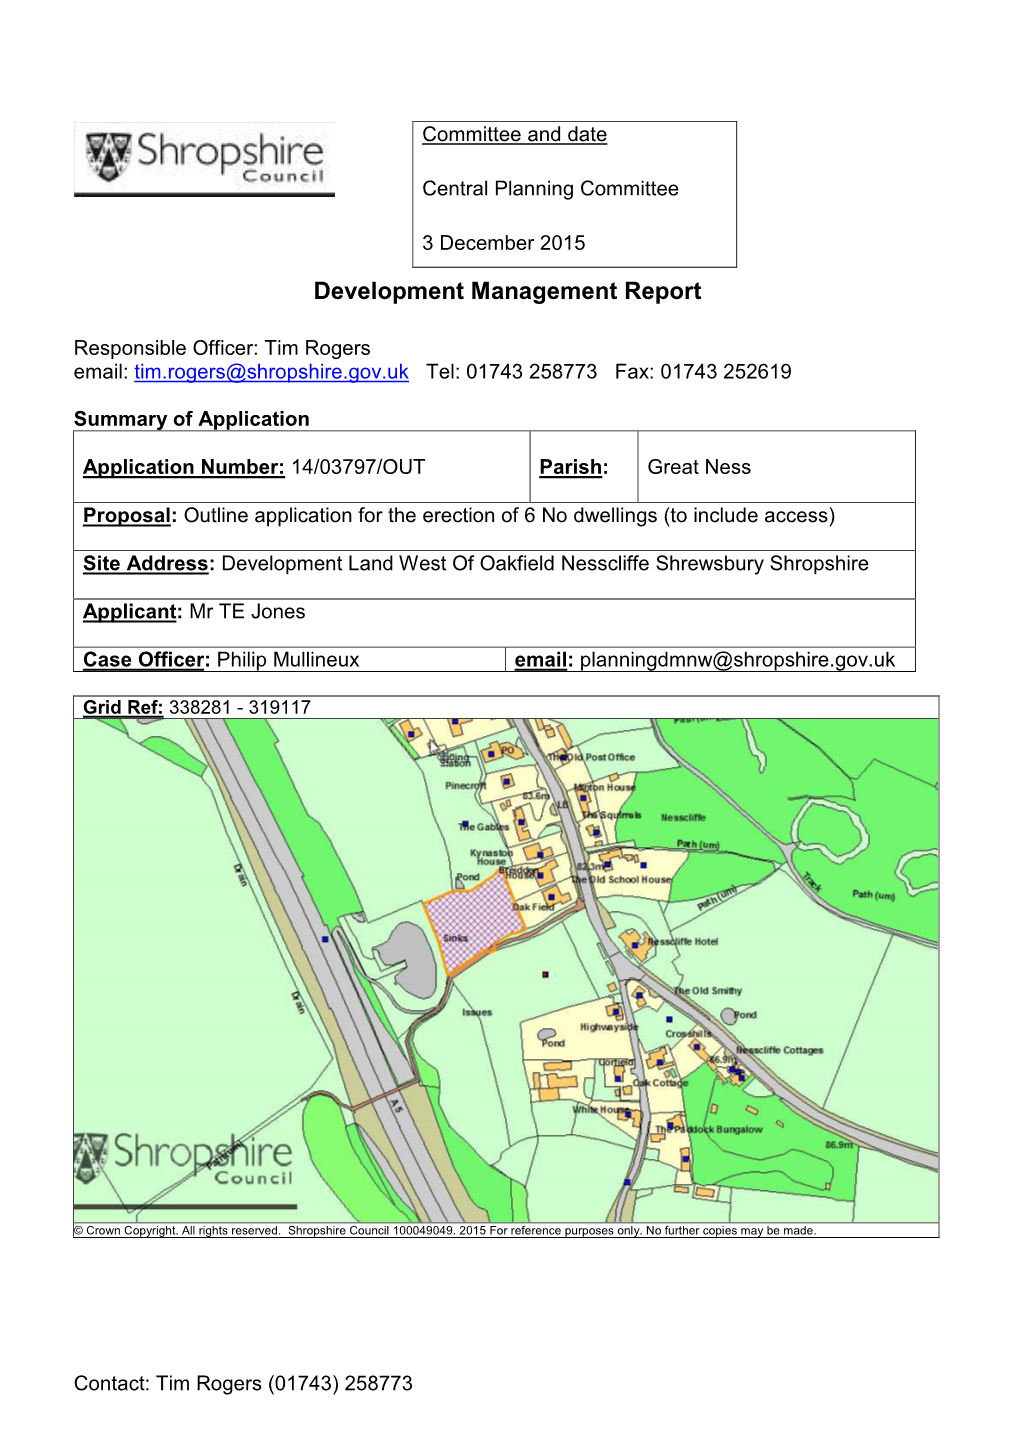 Development Land West of Oakfield, Nesscliffe, Shrewsbury, Shropshire